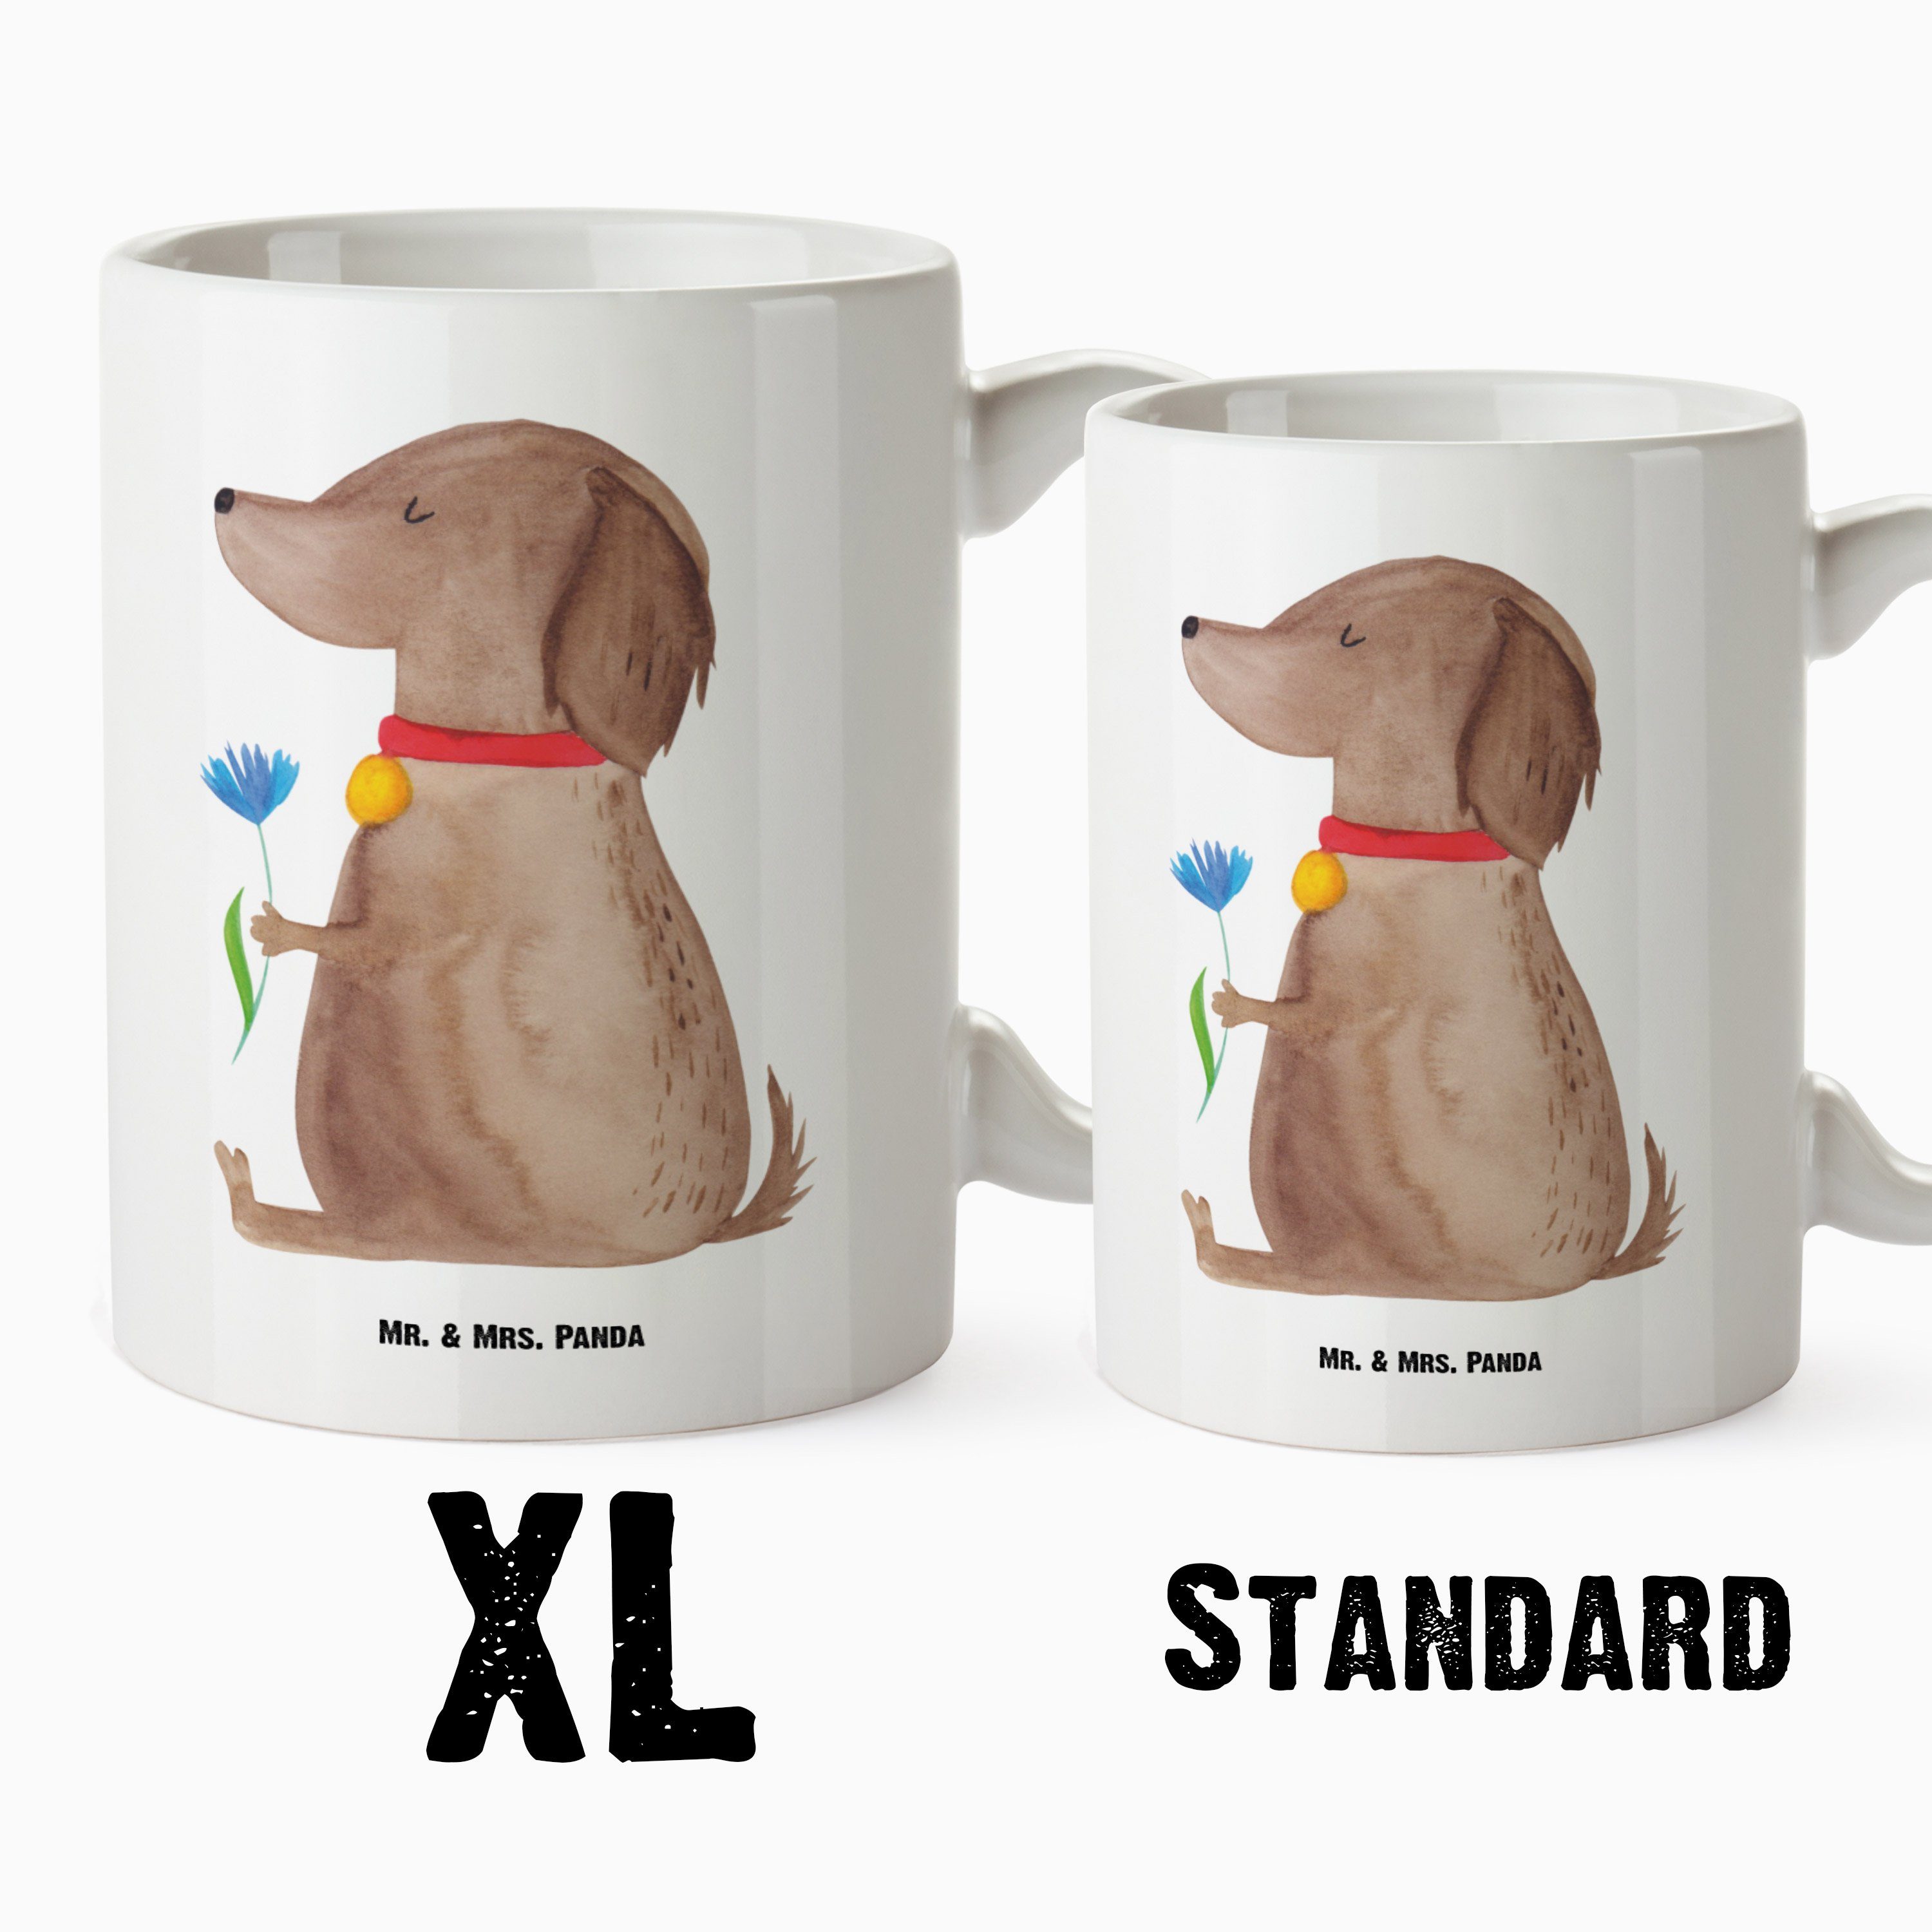 Mr. & Mrs. Panda Kaffeetasse, XL - Hund Grosse Blume Tasse - Keramik Geschenk, Hundesp, Tasse Hundeliebe, Weiß